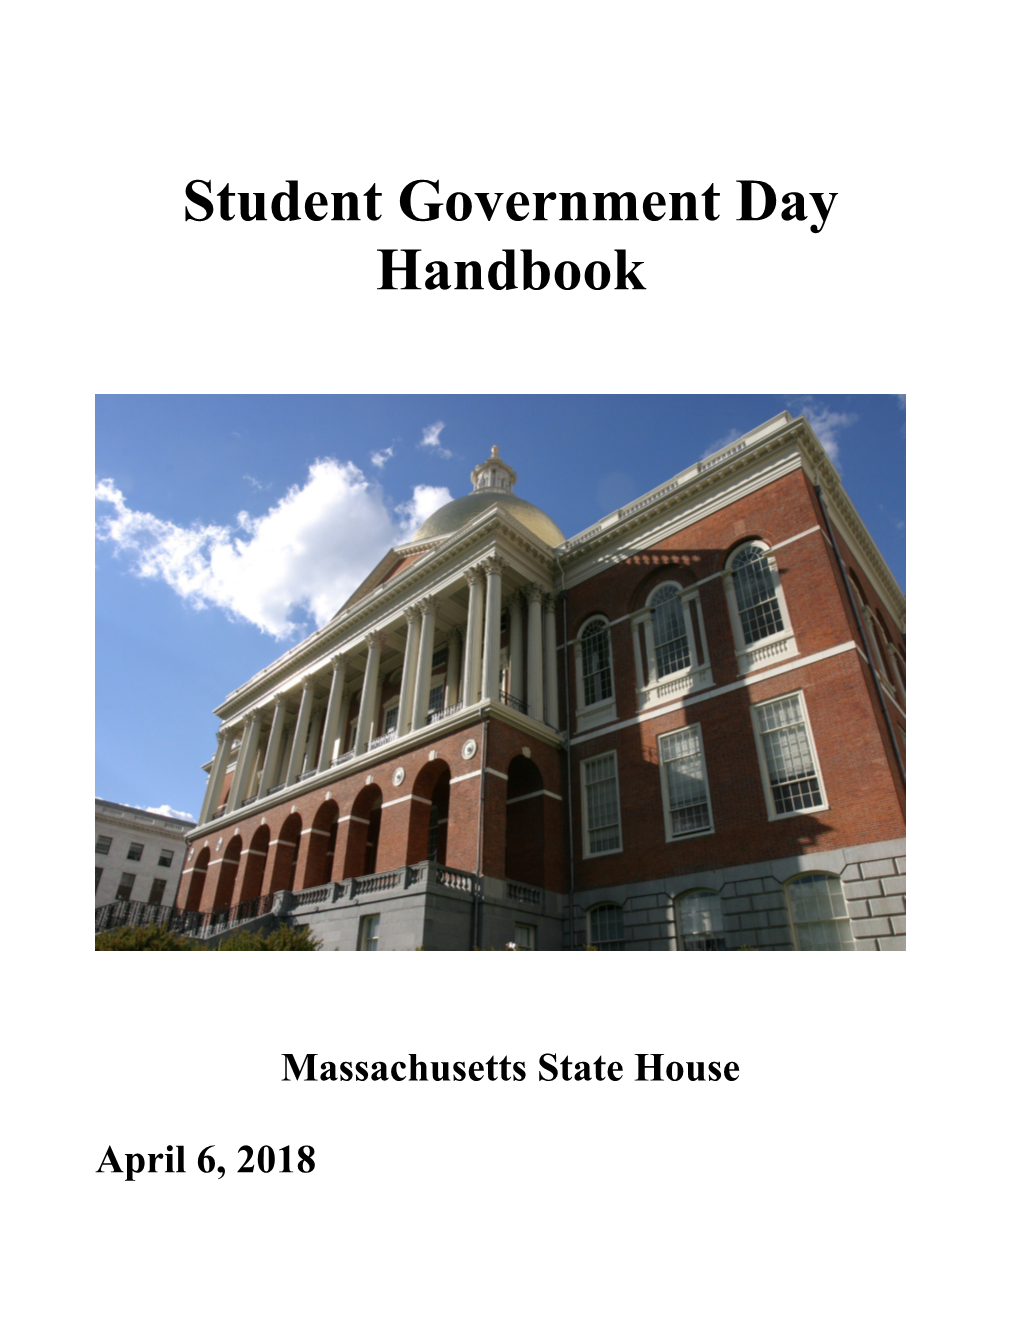 Student Government Day Handbook 2018